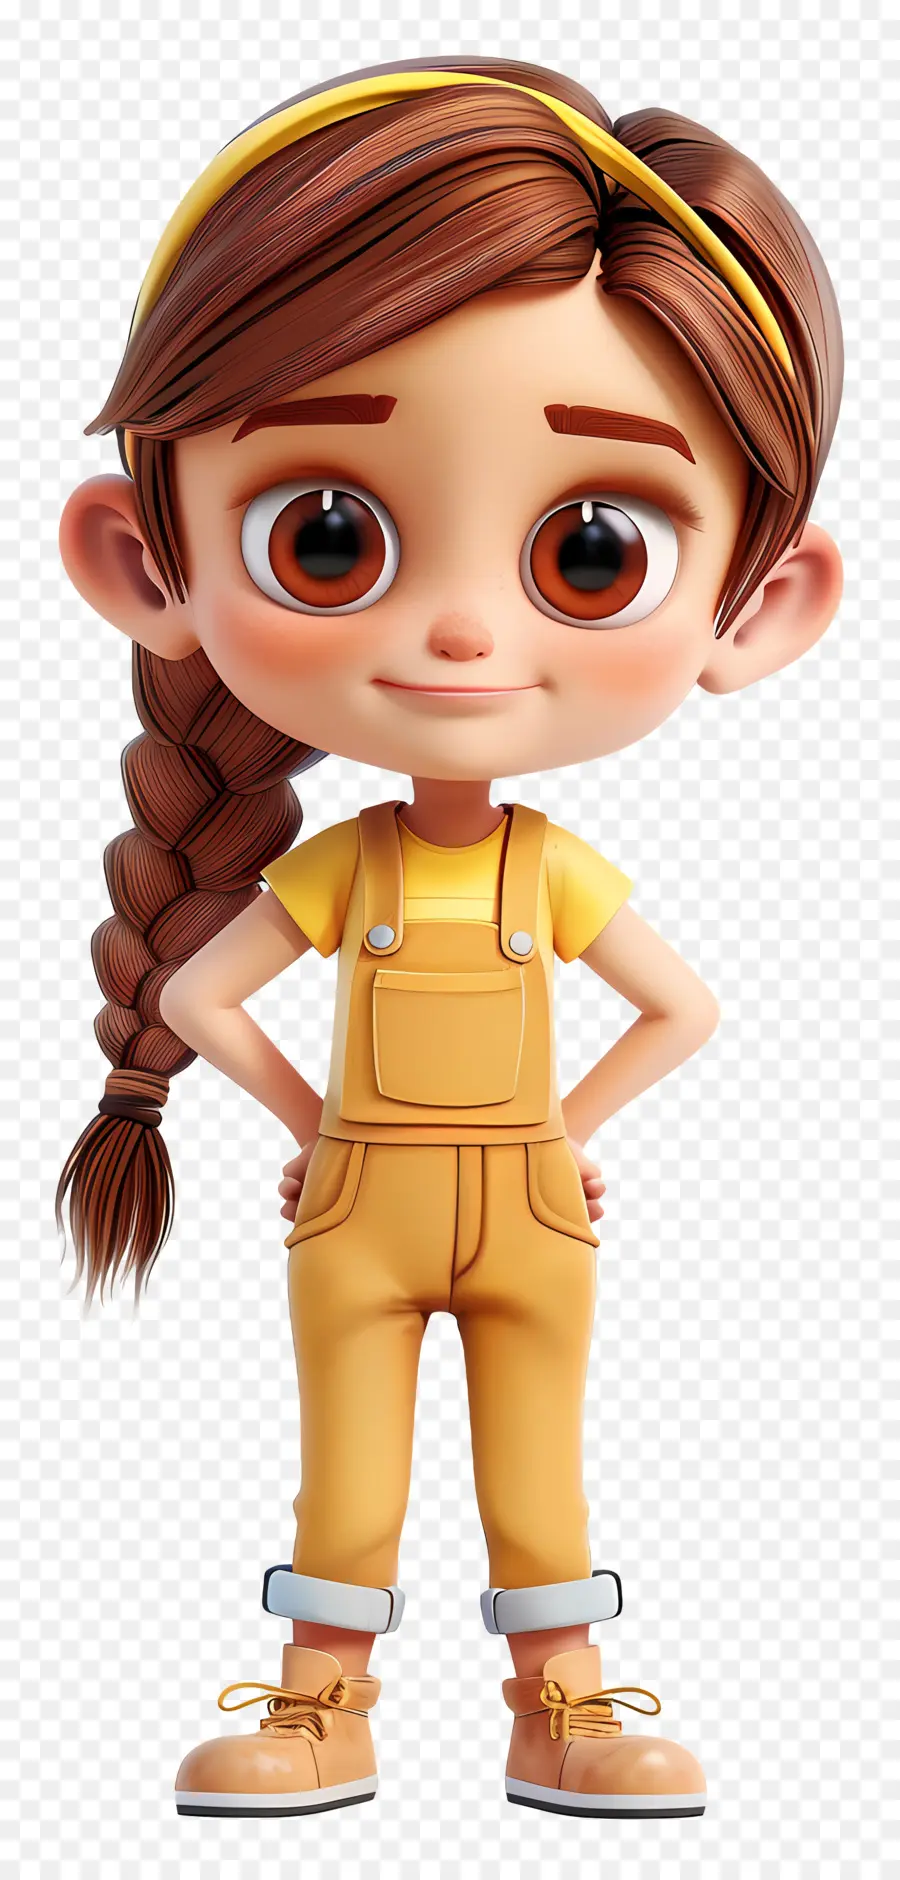 характер девушки，персонажа из мультфильма PNG